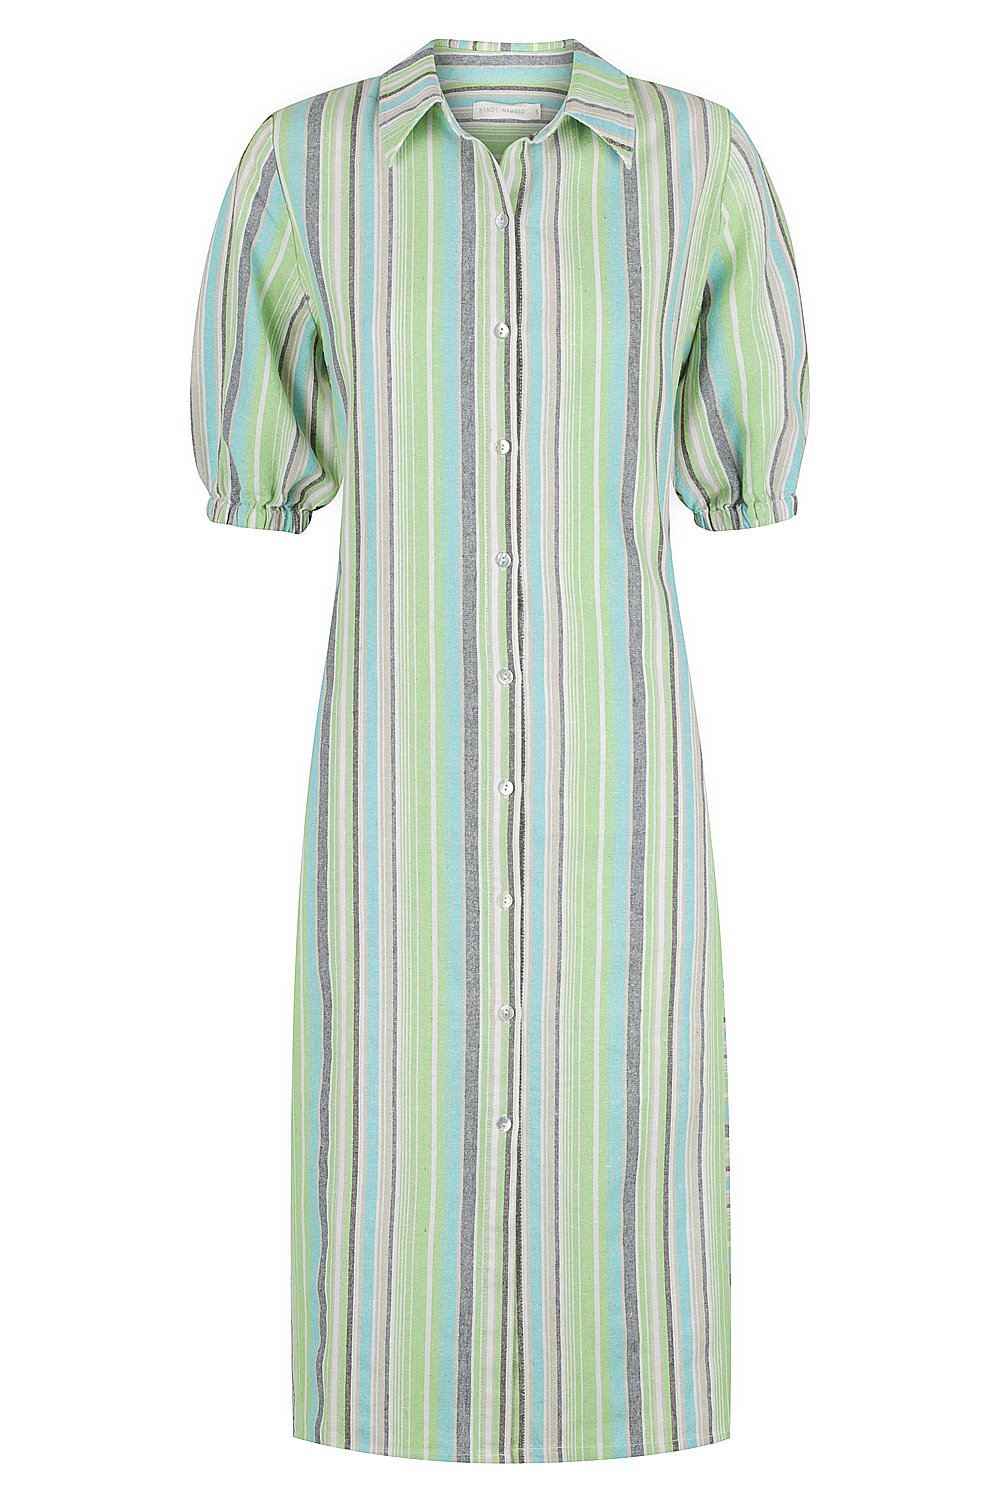 Bande Studio - Oceania Stripe Linen Shirt Dress